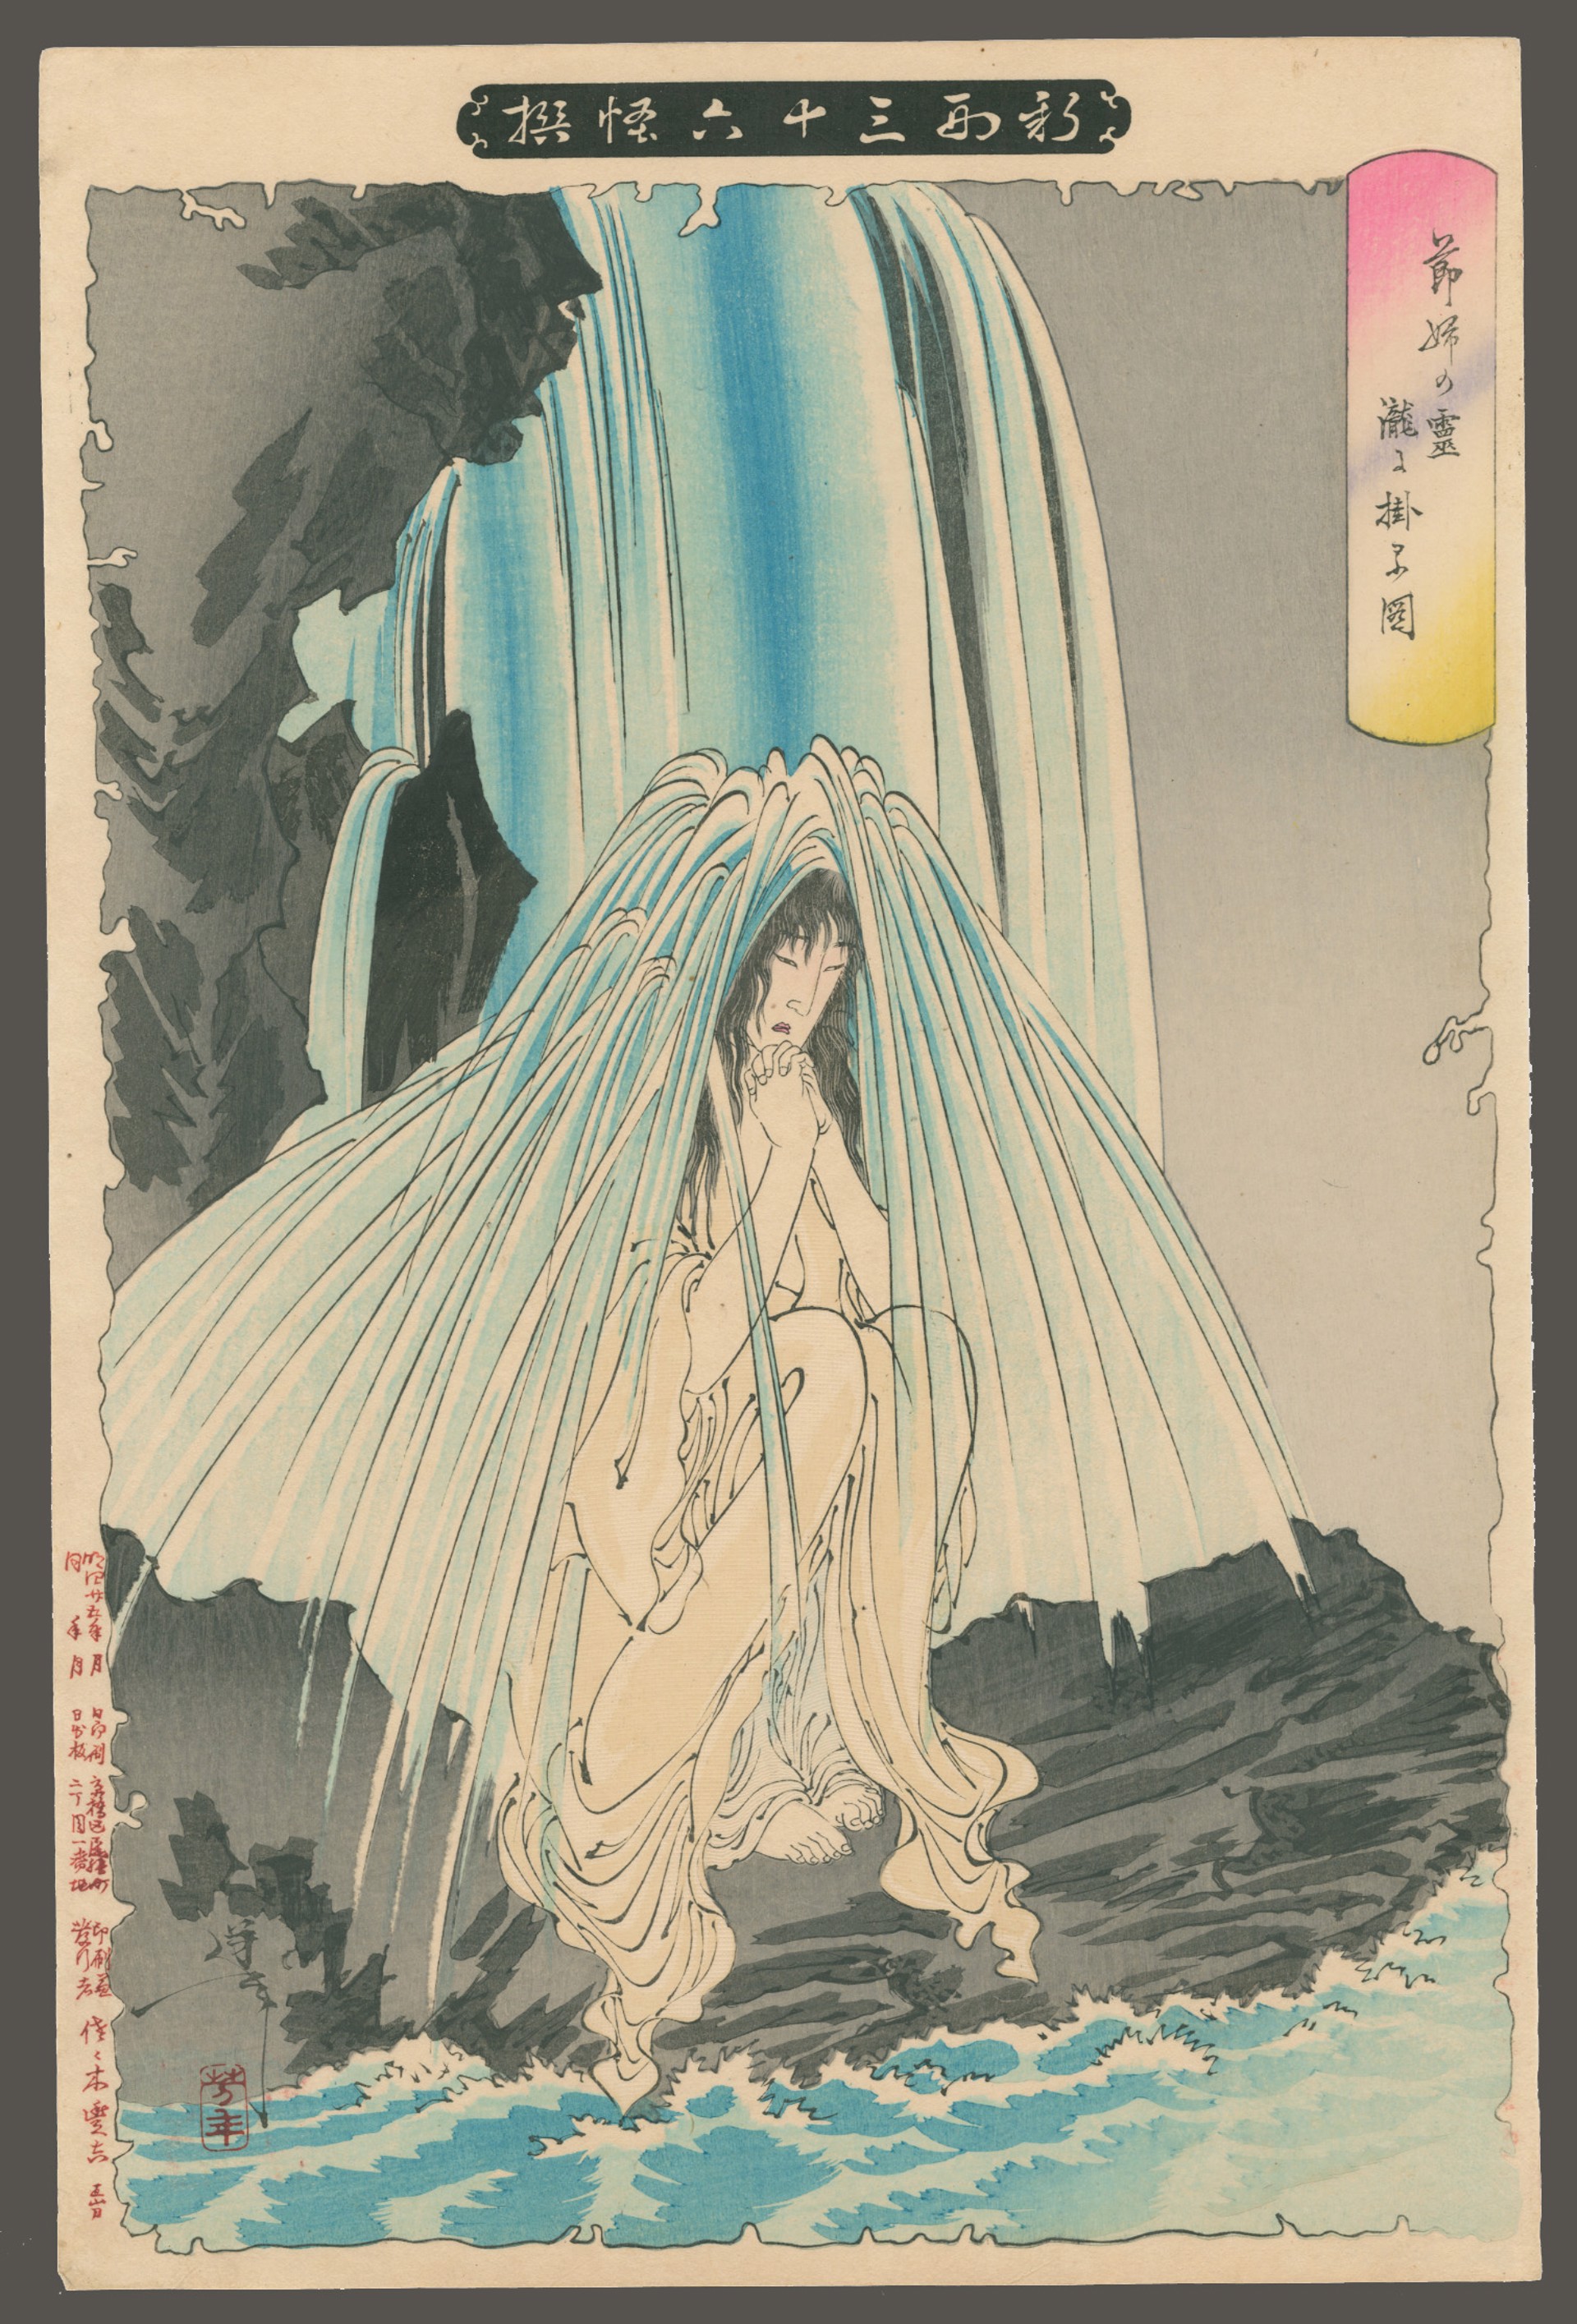 #33 Botaro's Nurse Otsuji Prays for his Release in a Waterfall 36 Ghosts by Yoshitoshi